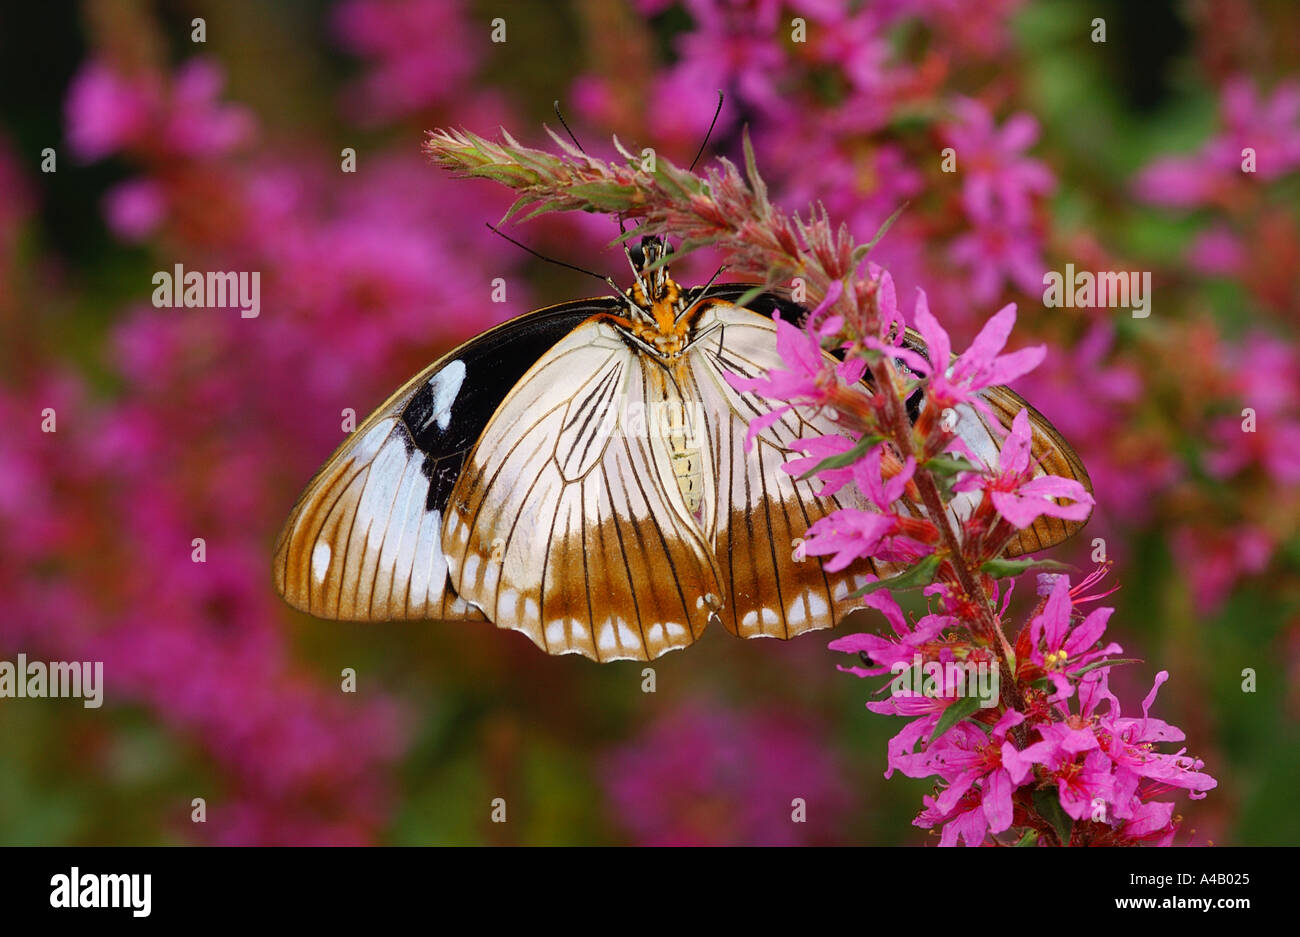 Female Papilio dardanus butterfly feeding from flower Stock Photo